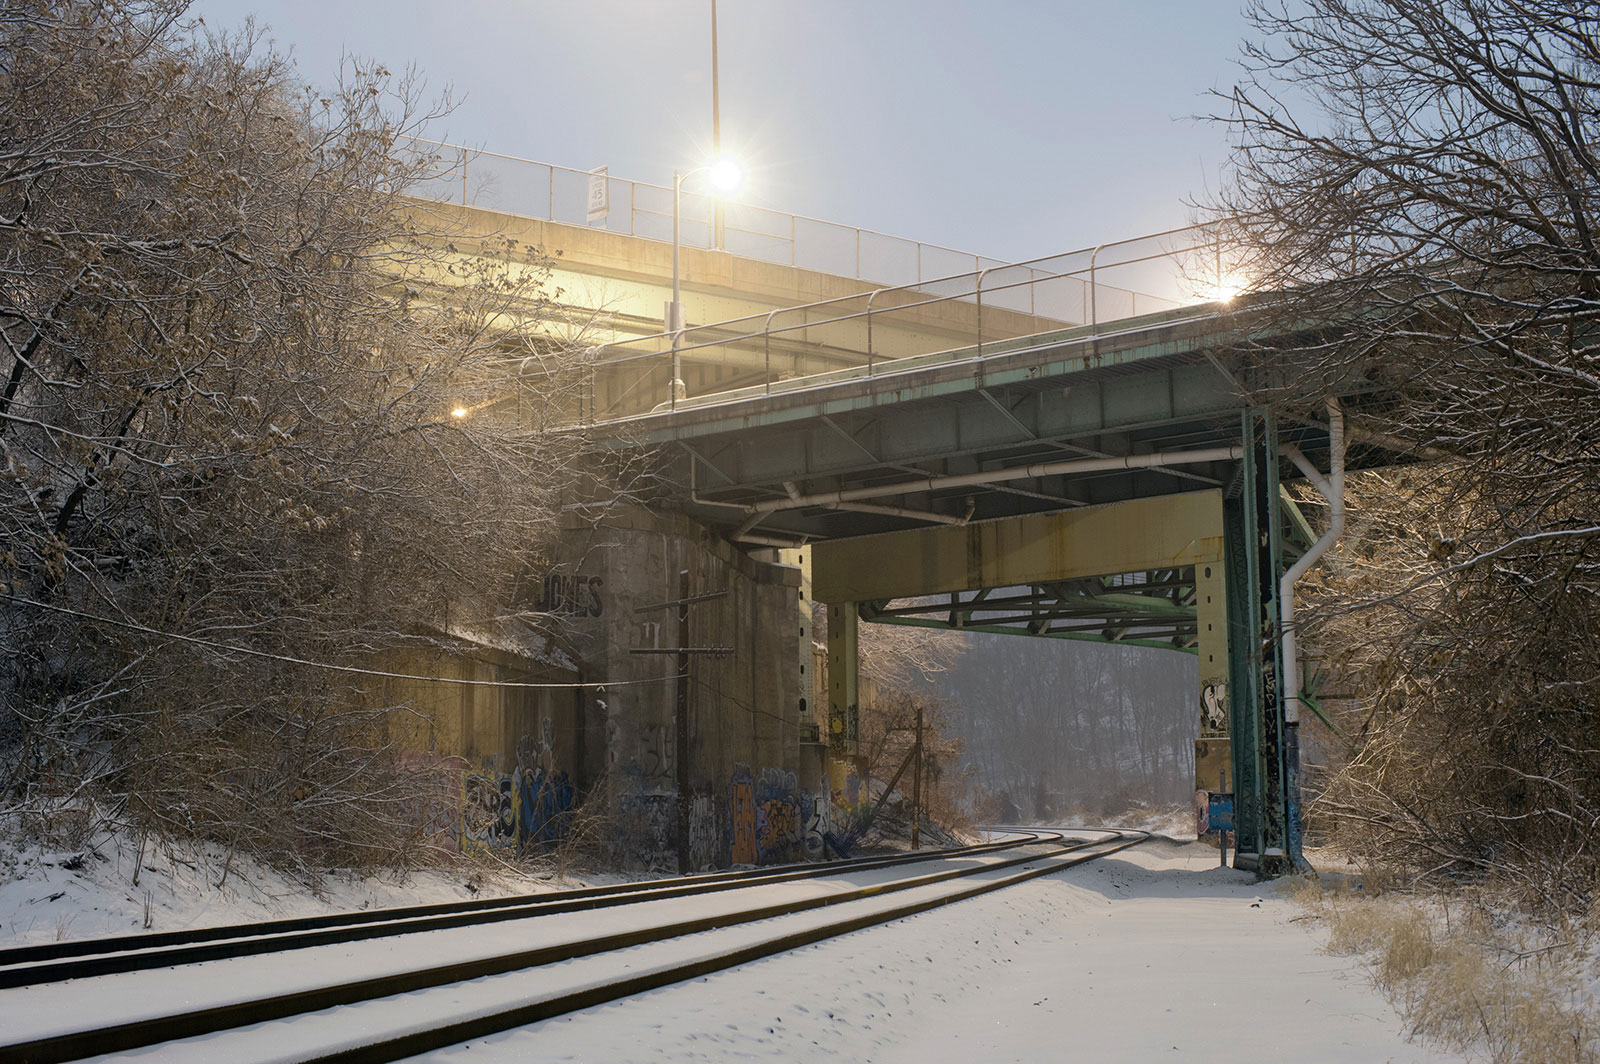 Railroad under bridge during winter